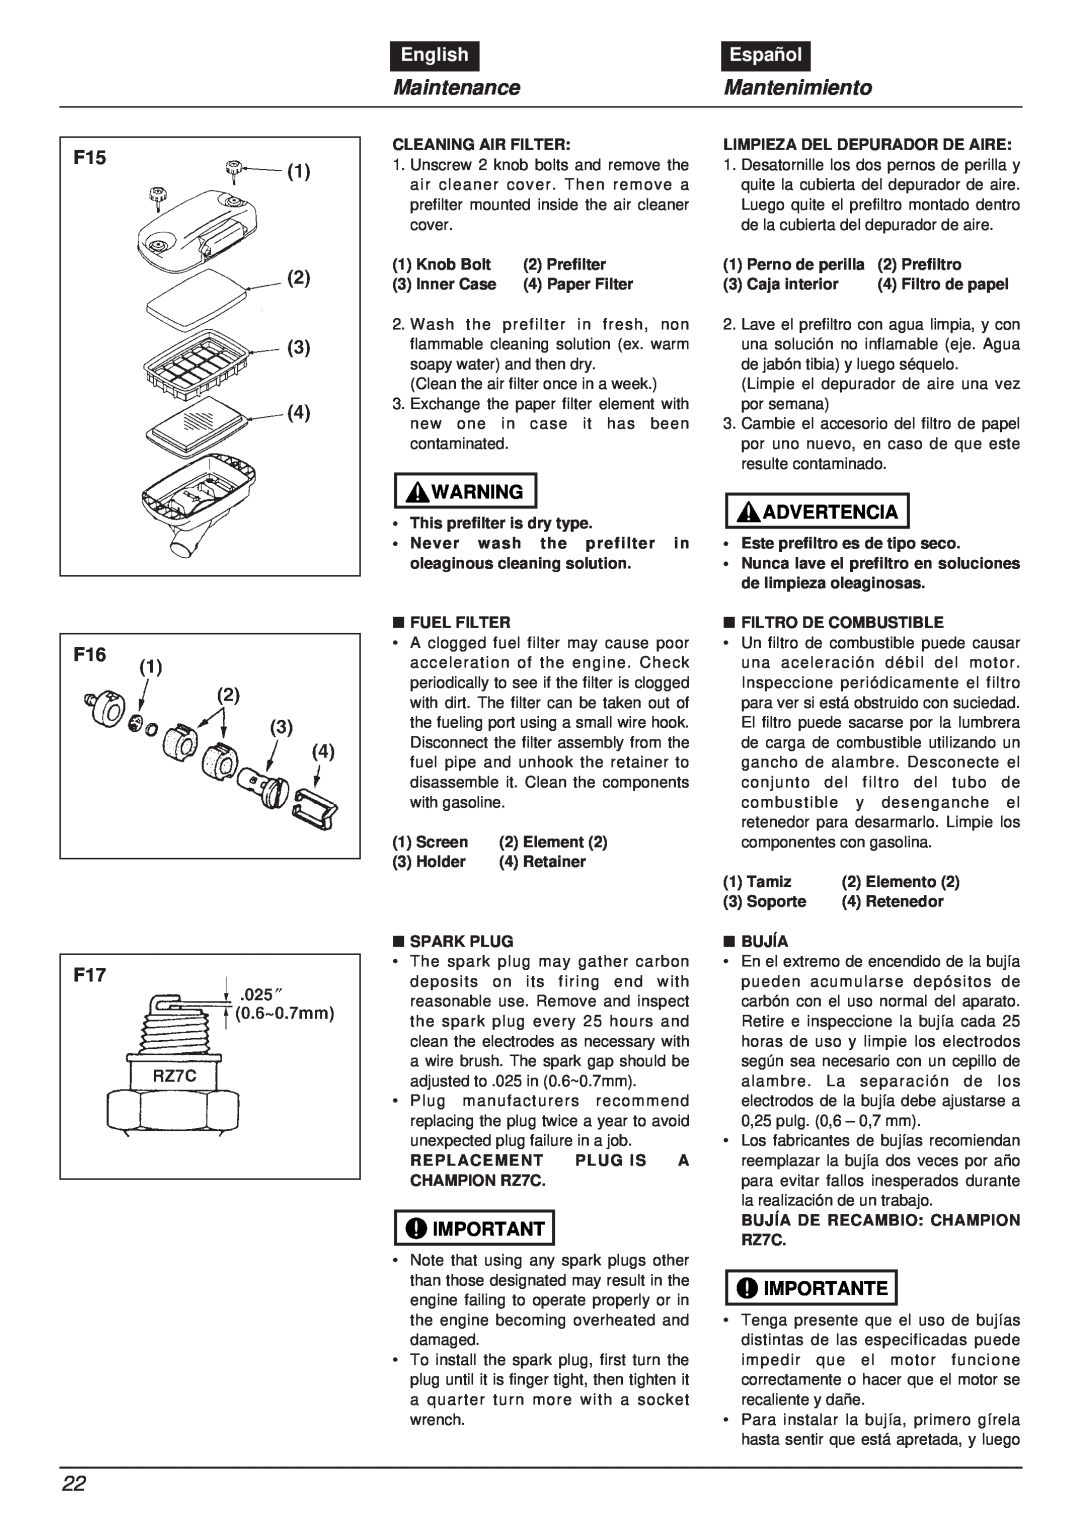 RedMax EBZ8000RH manual MaintenanceMantenimiento, English, Español, F16 F17, Advertencia, Importante 